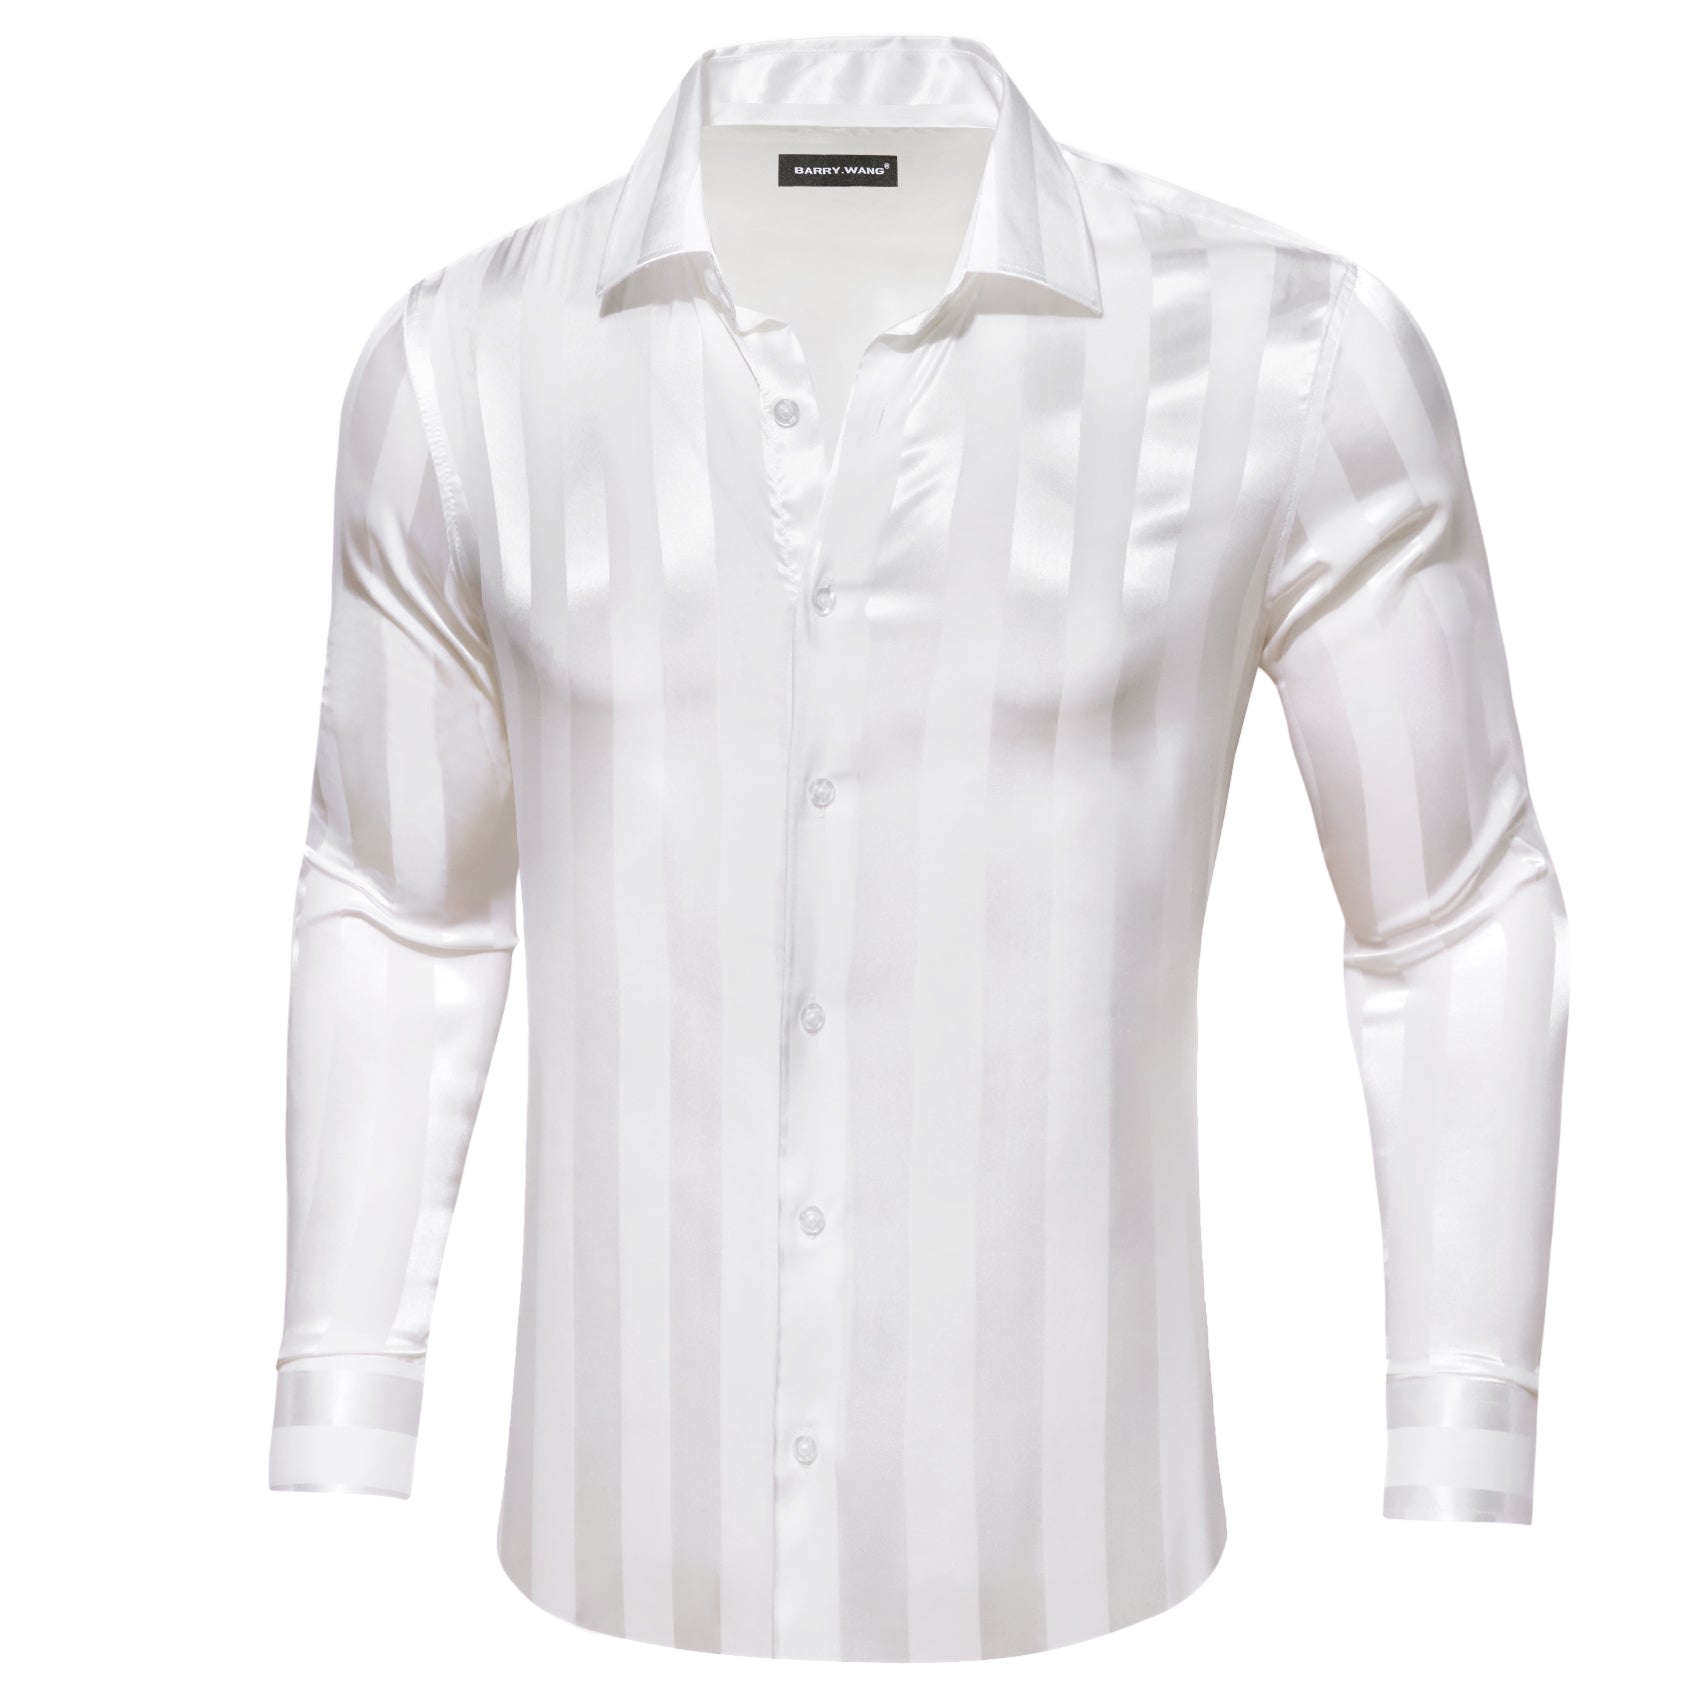 Barry.wang White Striped Silk Men's Shirt